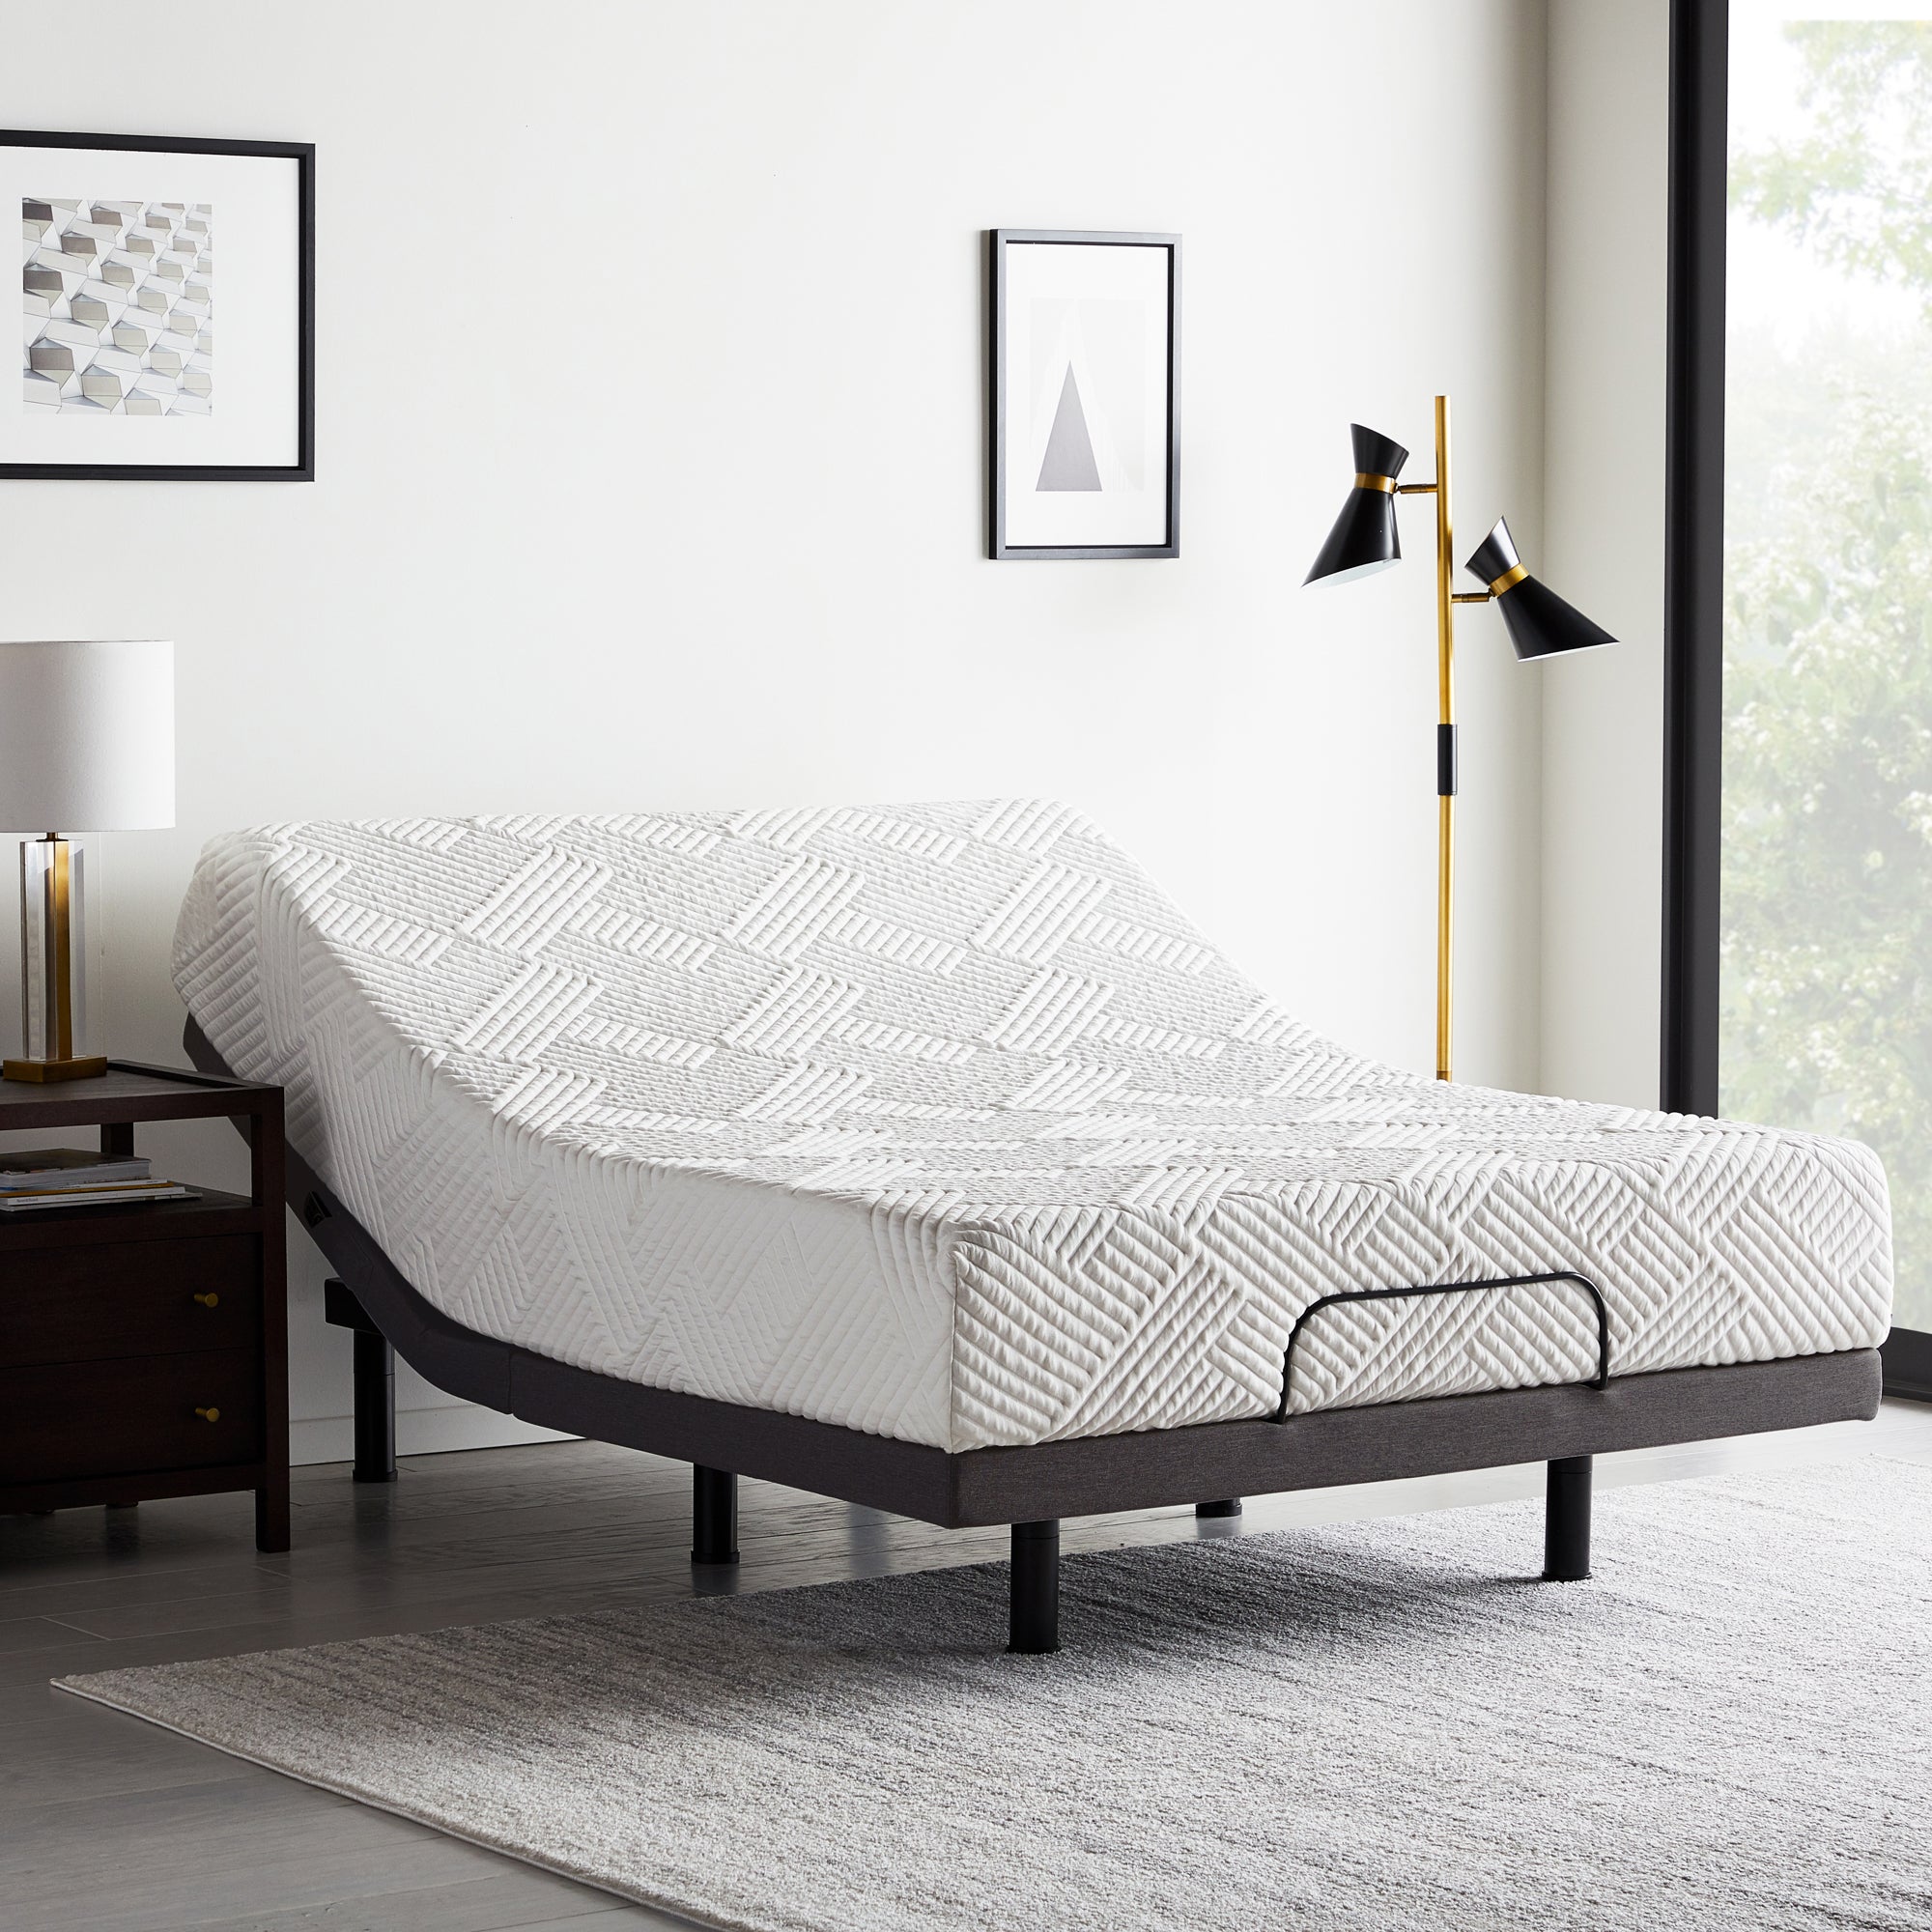 M555 Adjustable Bed